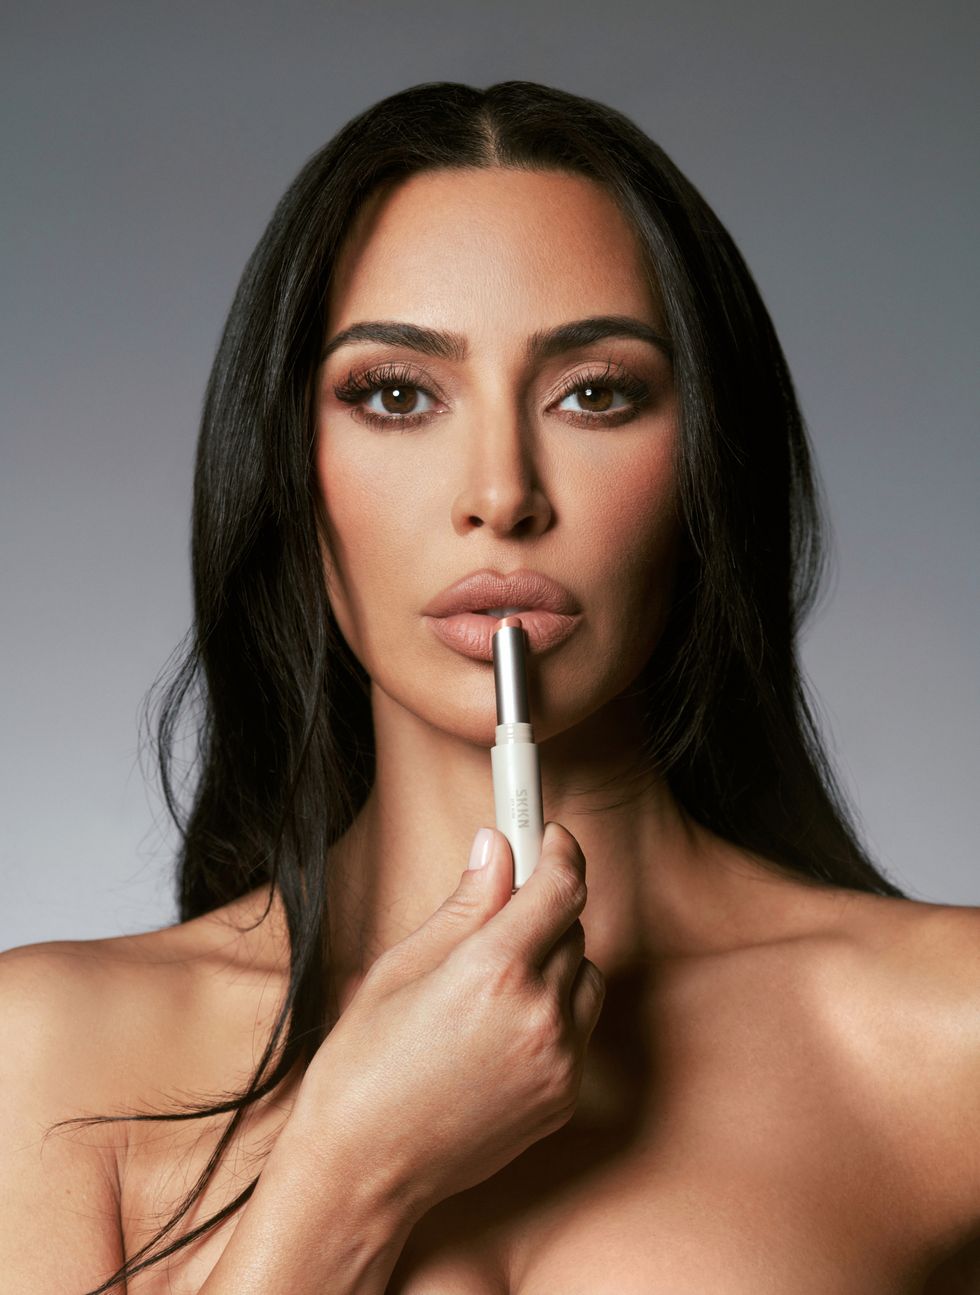 It's Time to Get 'Nude' With Kim Kardashian